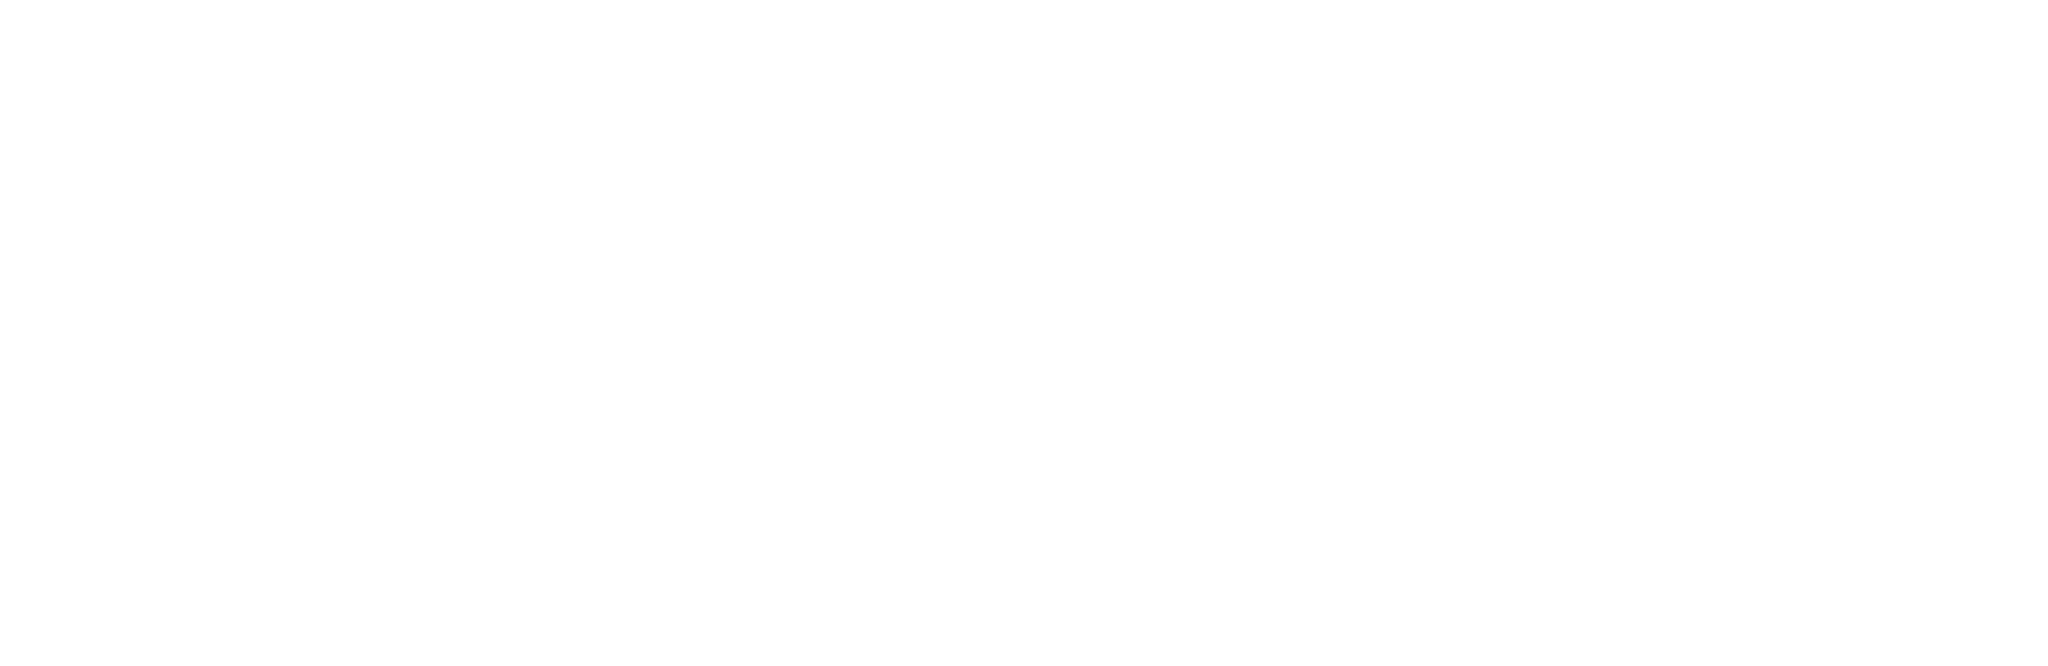 SDA Sustainability Solutions